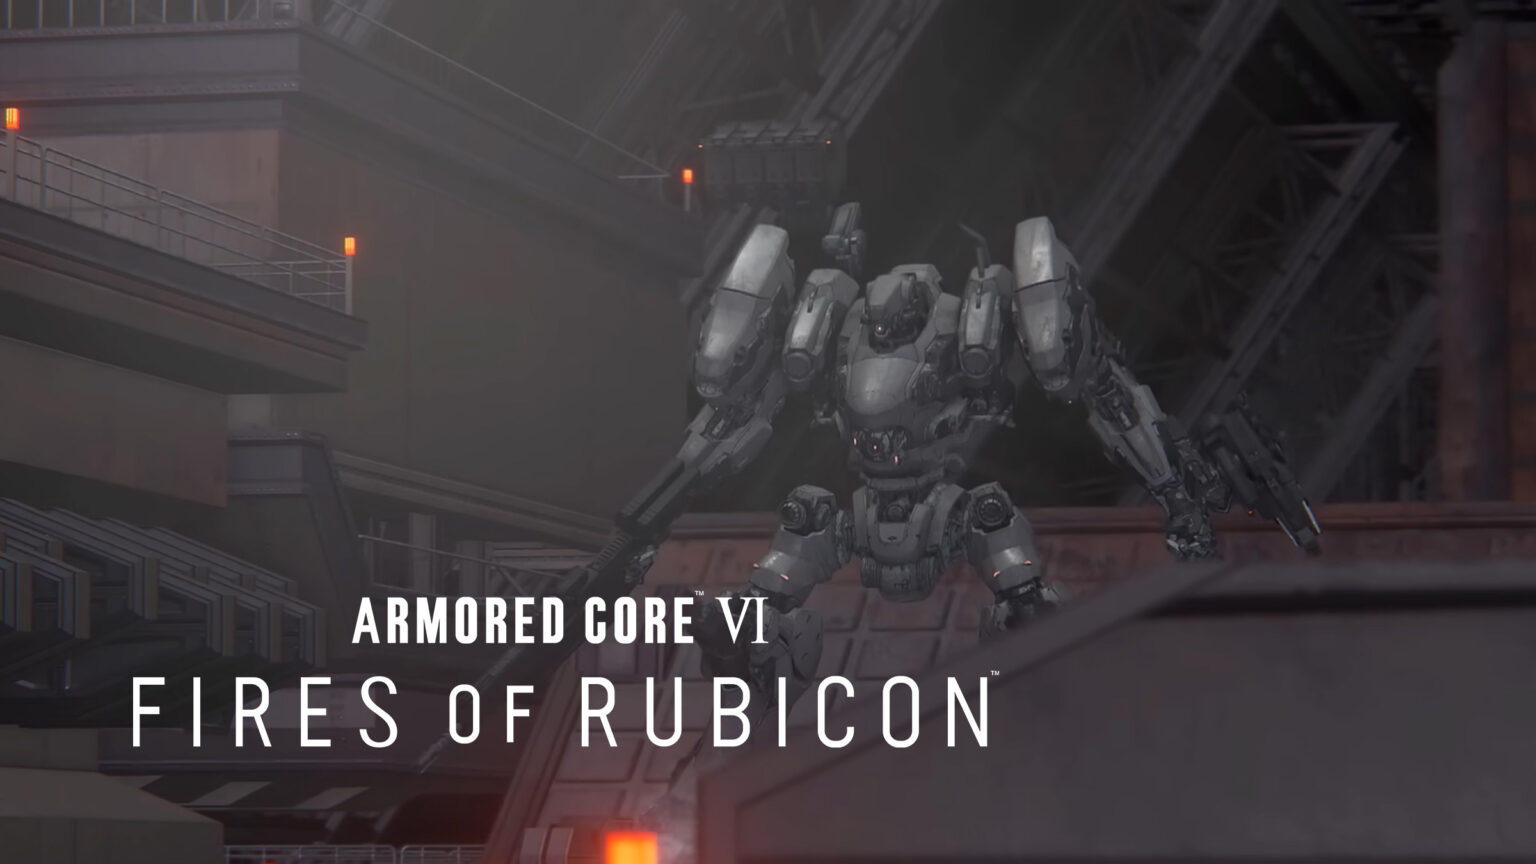 Armored Core VI: Fires of Rubicon download the last version for mac